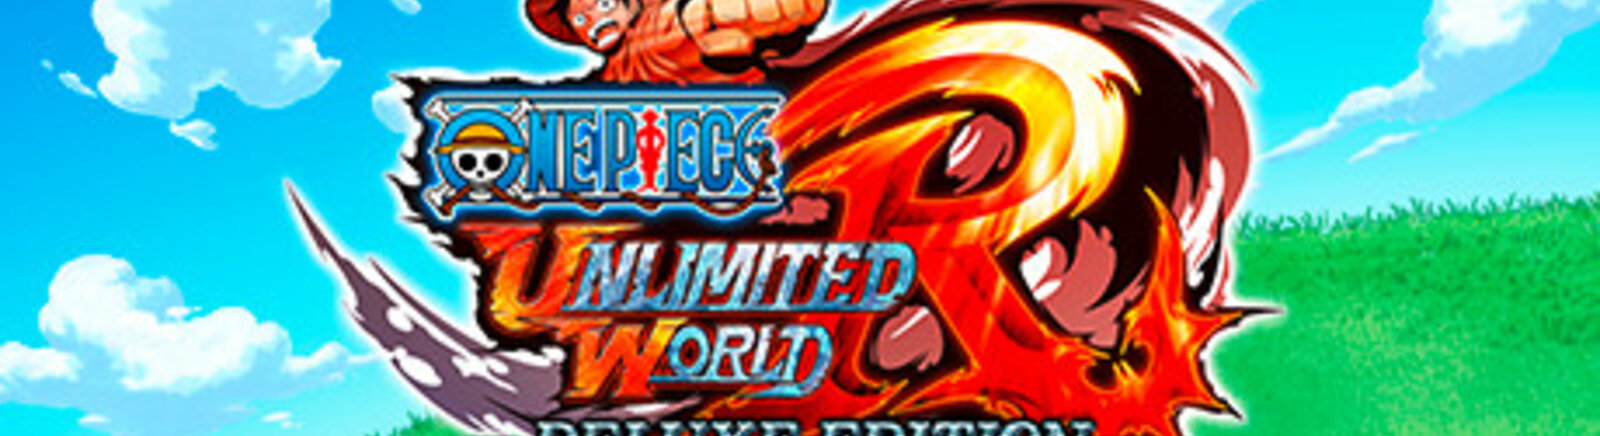 Дата выхода One Piece: Unlimited World Red (Wan Pīsu: Anrimiteddo Wārudo Reddo)  на PS3, PS Vita и Wii U в России и во всем мире